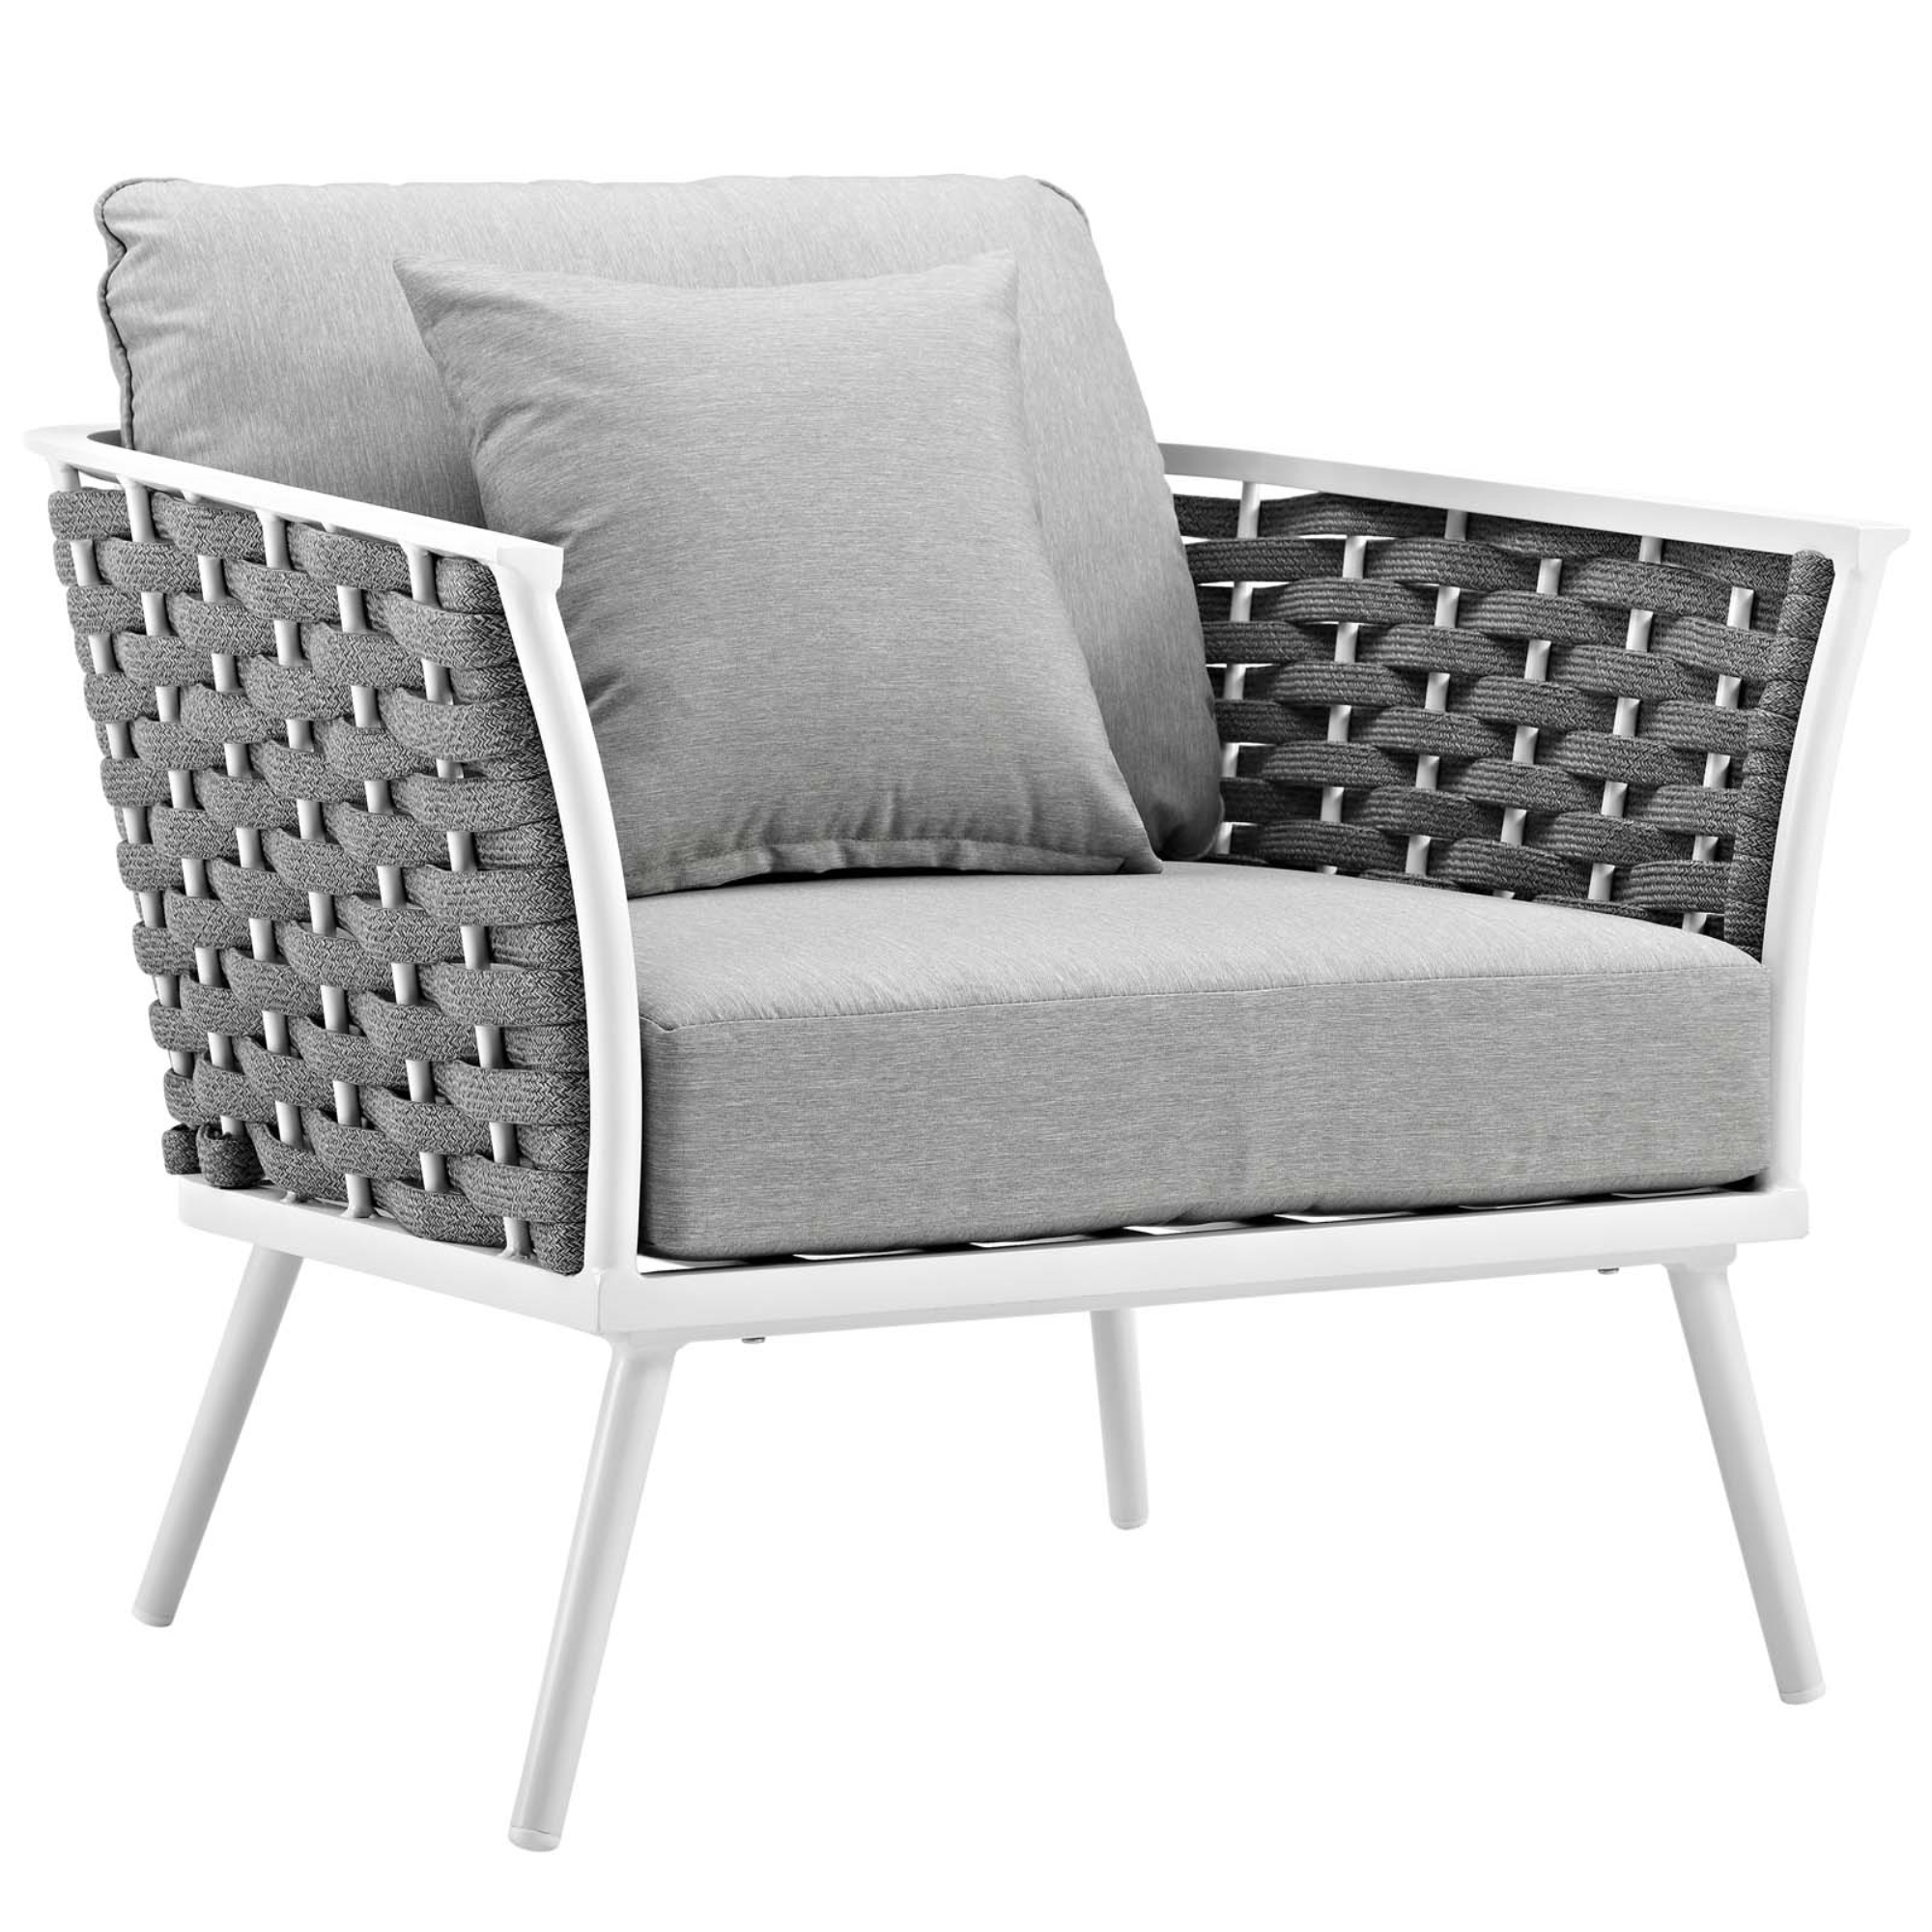 Ergode Stance 2 Piece Outdoor Patio Aluminum Sectional Sofa Set - White Gray